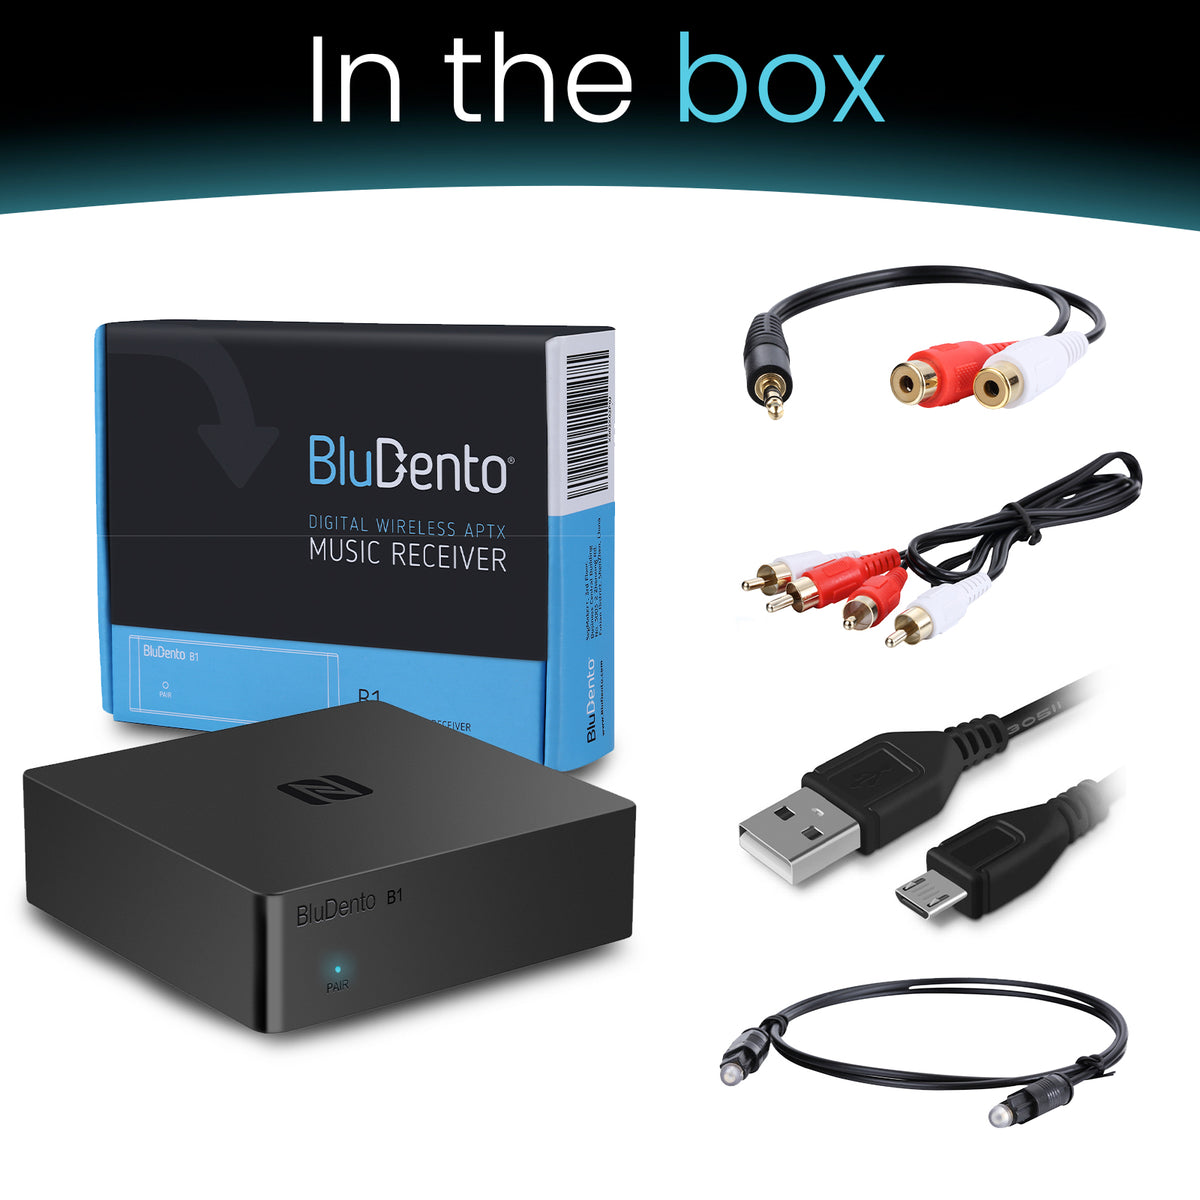 BluDento B1 in the box